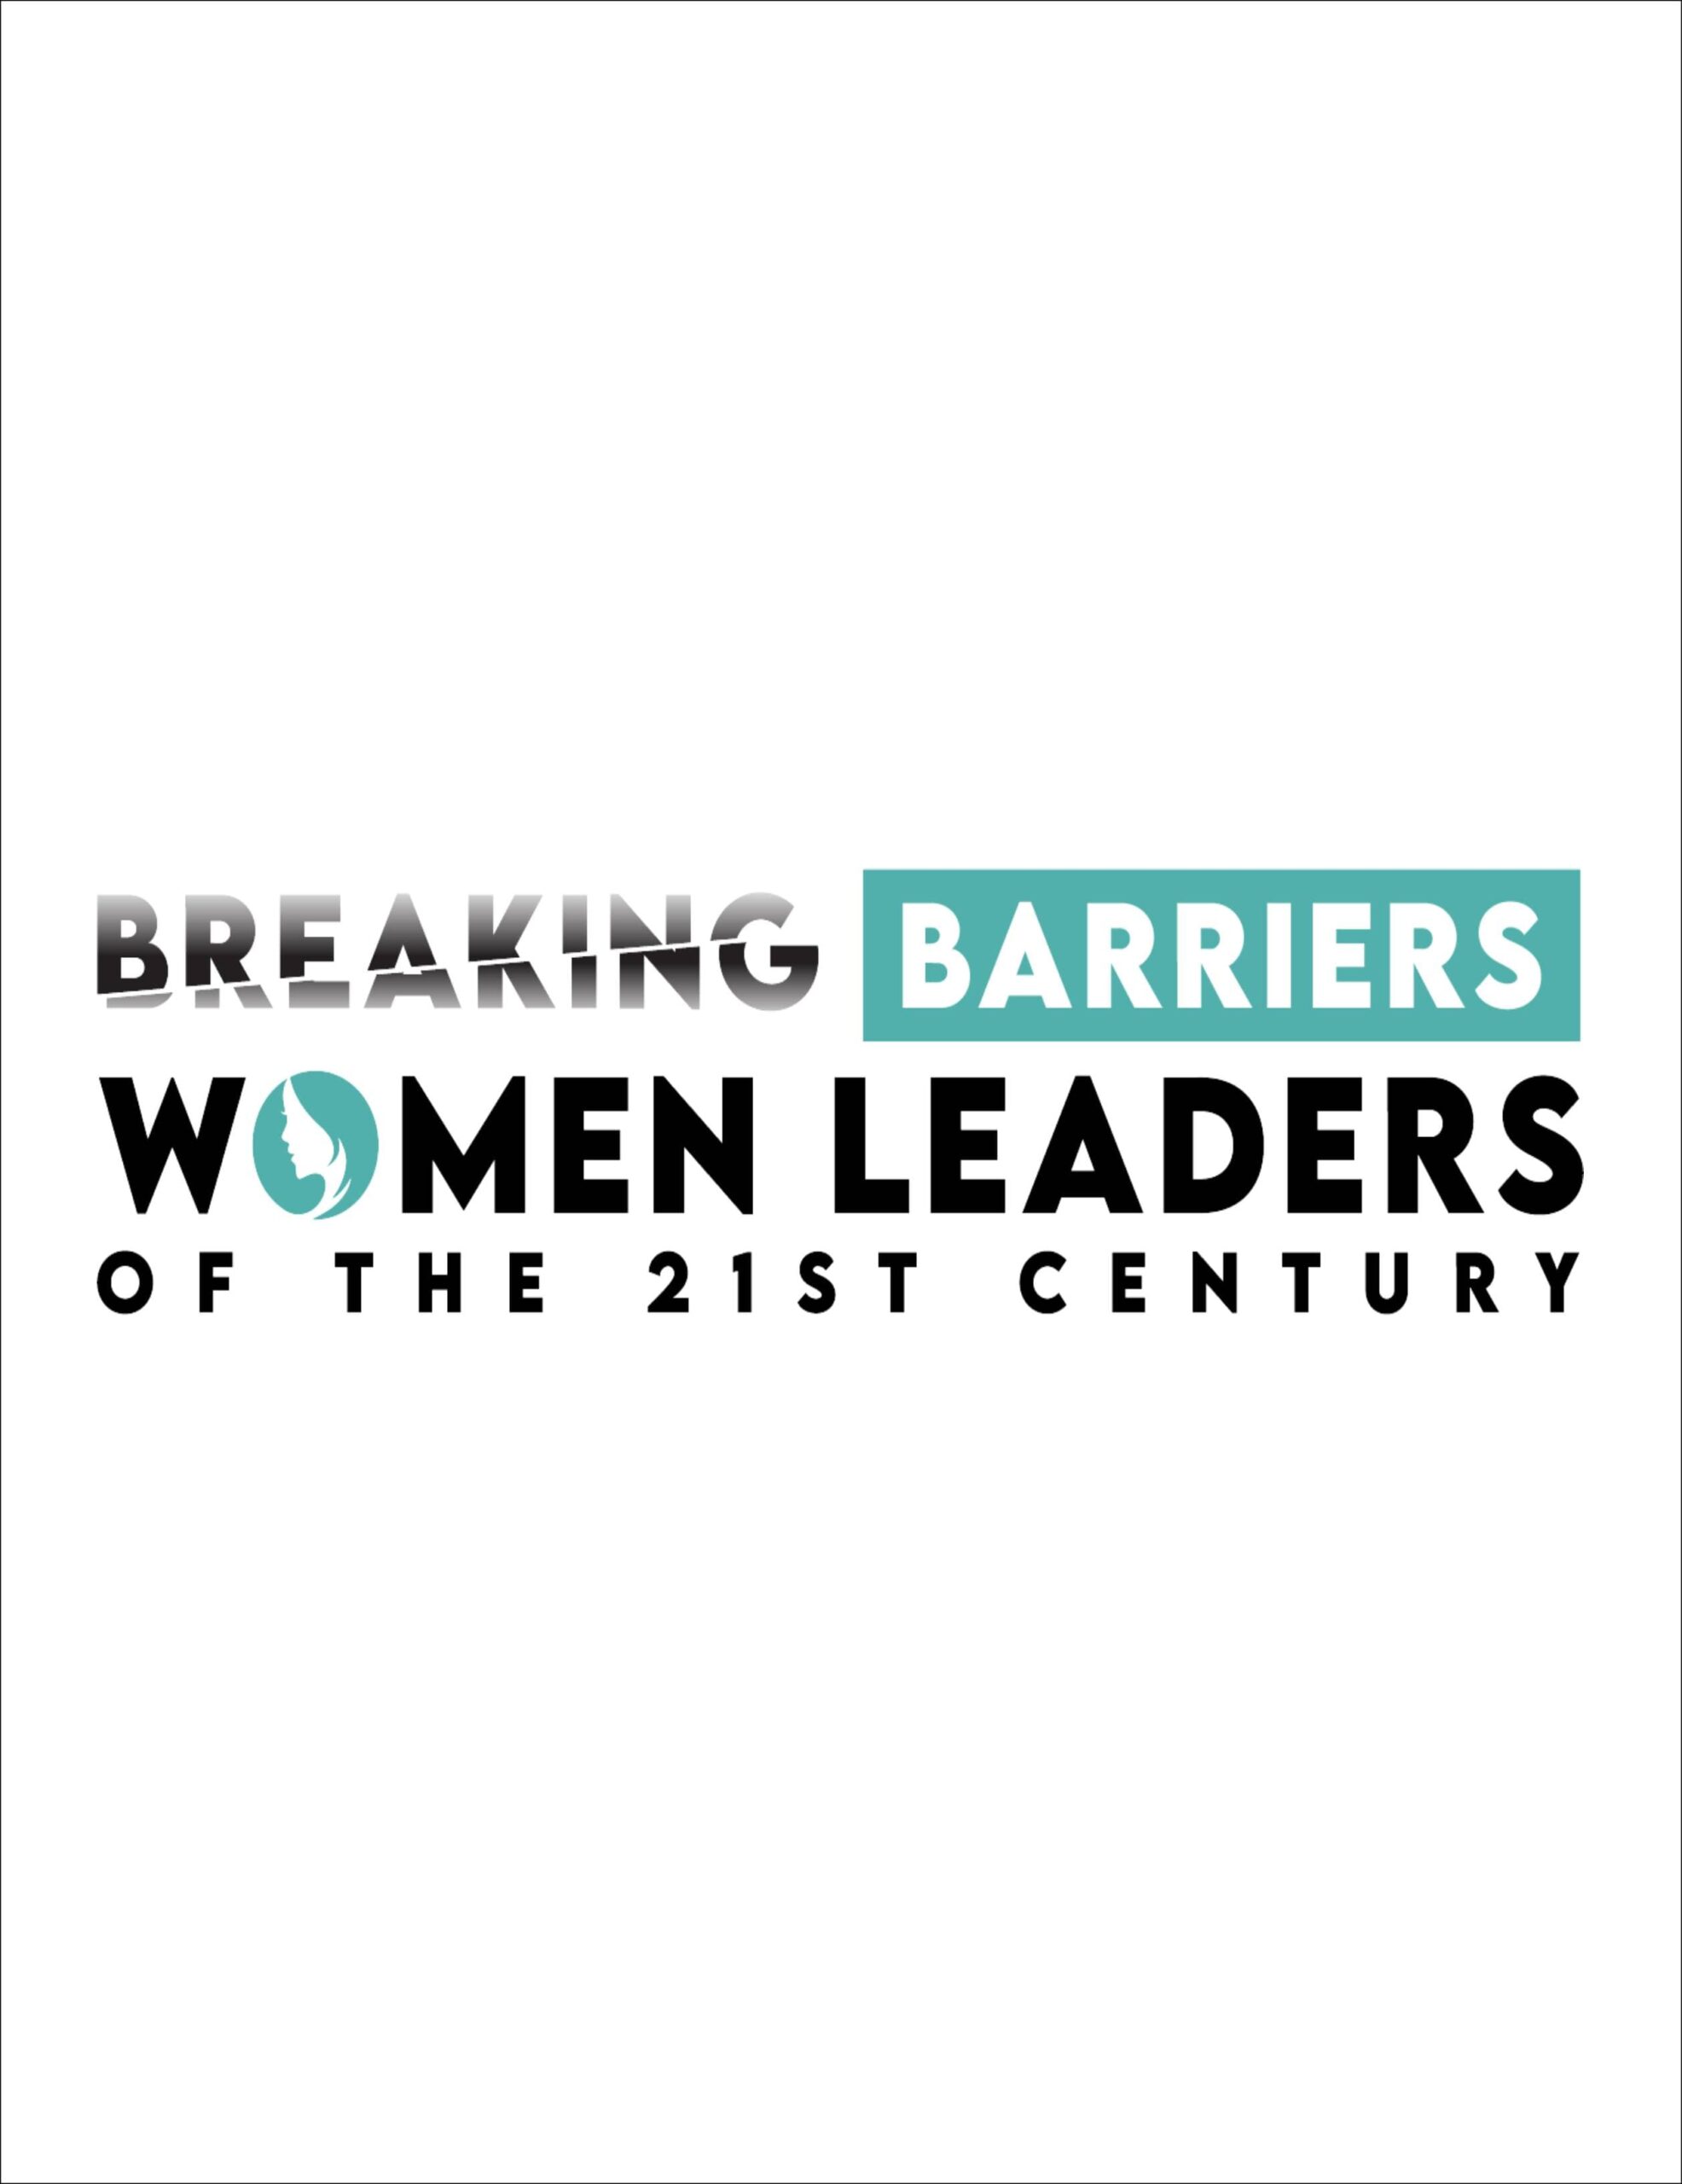 Breaking Barriers: Women Leaders of the 21st Century